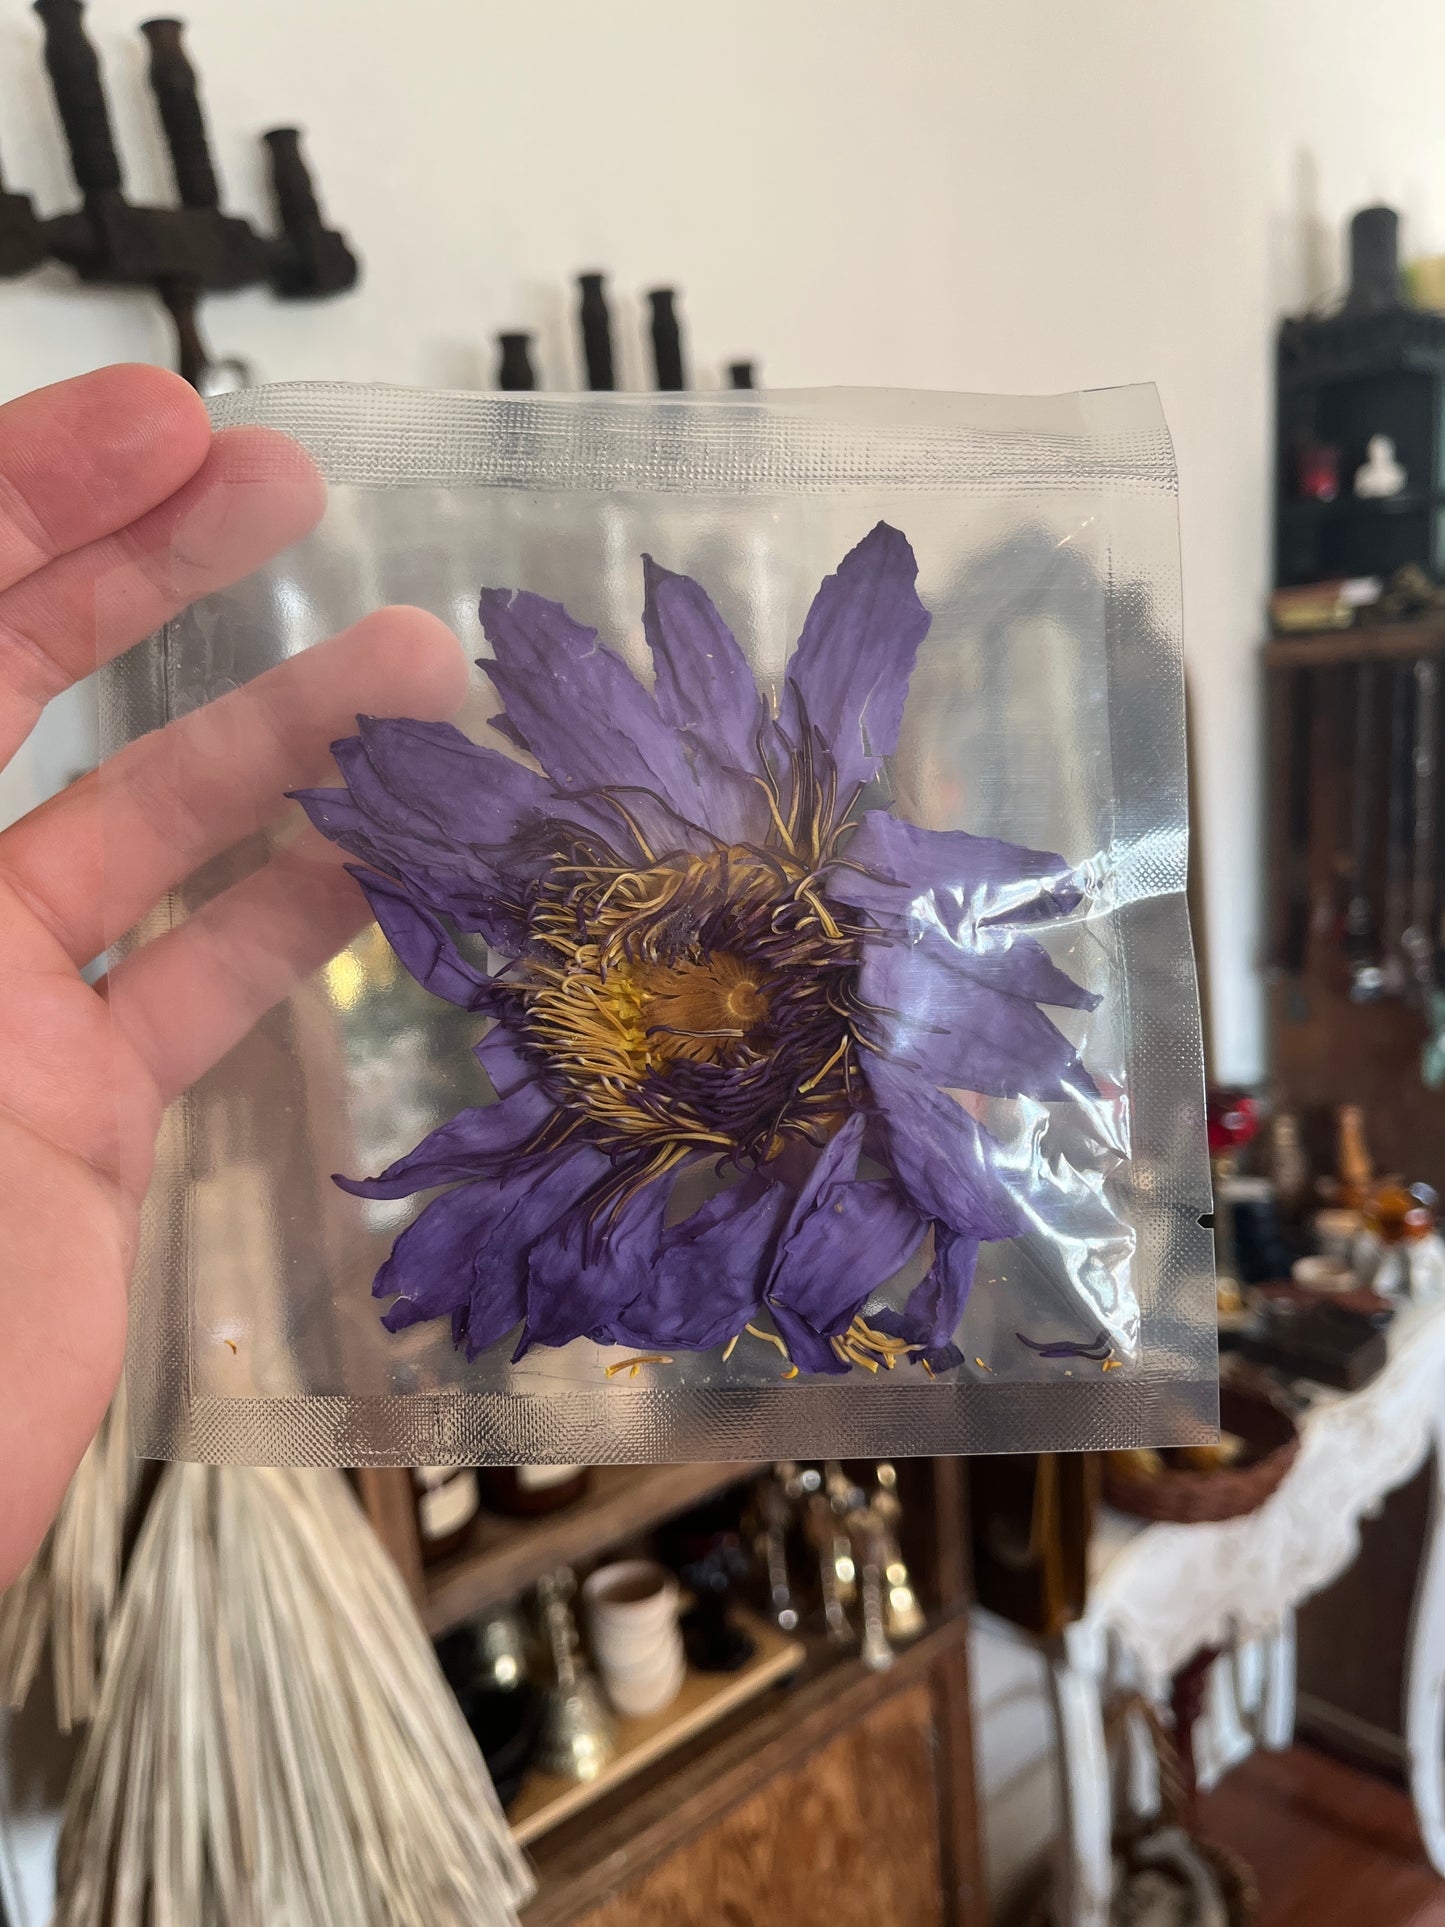 Blue lotus flower (whole)